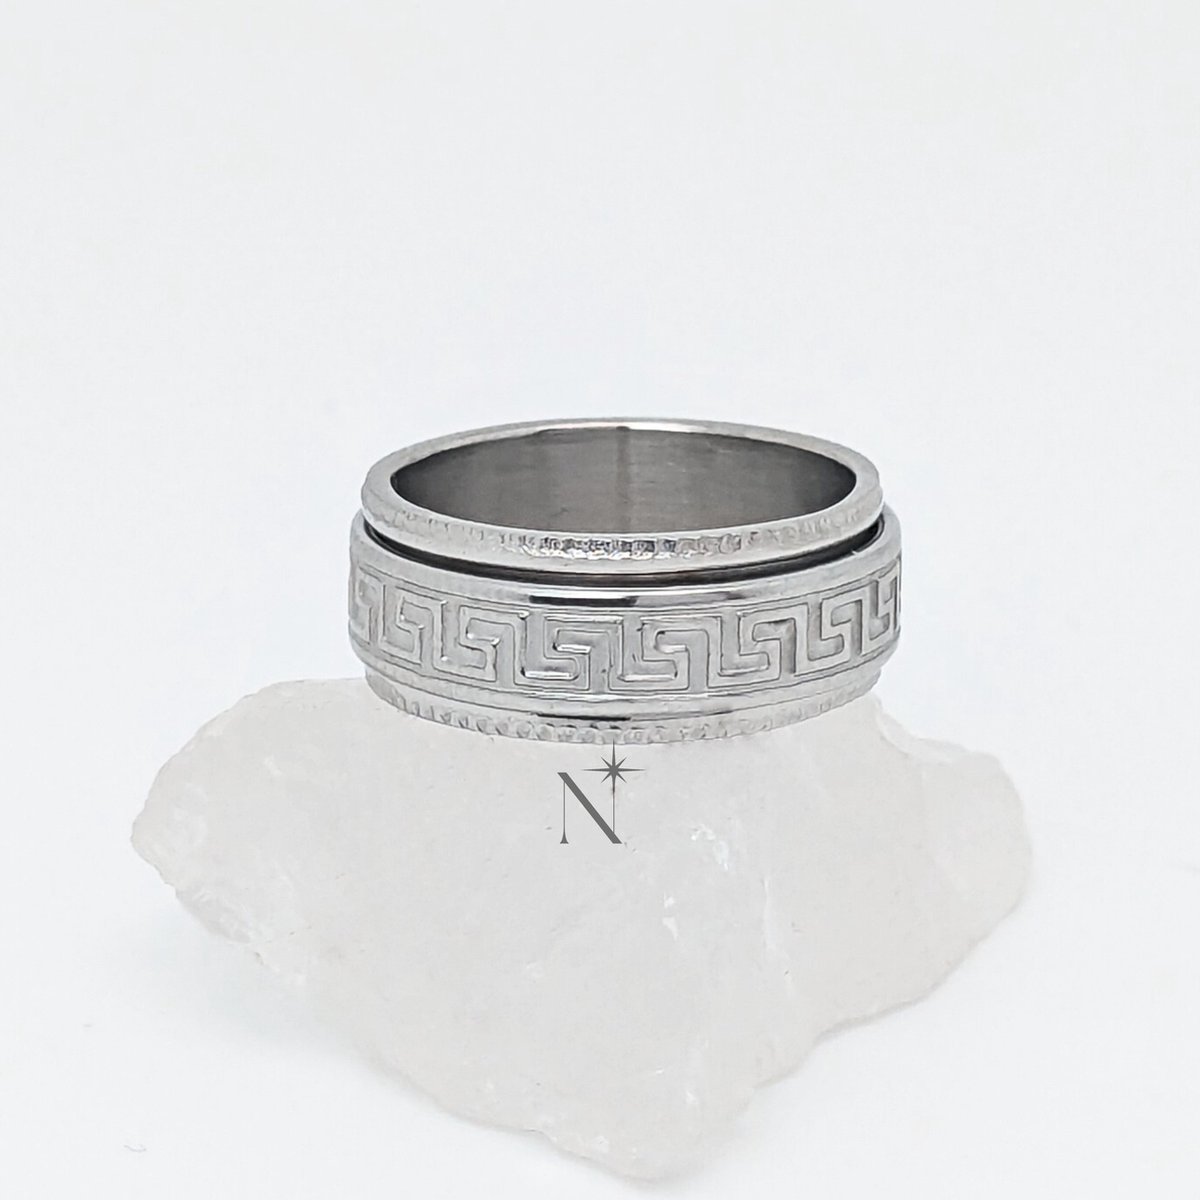 Luminora Zeus Ring Zilver - Fidget Ring Grieks - Anxiety Ring - Stress Ring - Anti Stress Ring - Spinner Ring - Spinning Ring - Draai Ring - Maat 60 | ⌀ 19.0 - RVS Ring - Stainless Steel Ring - Wellness Sieraden